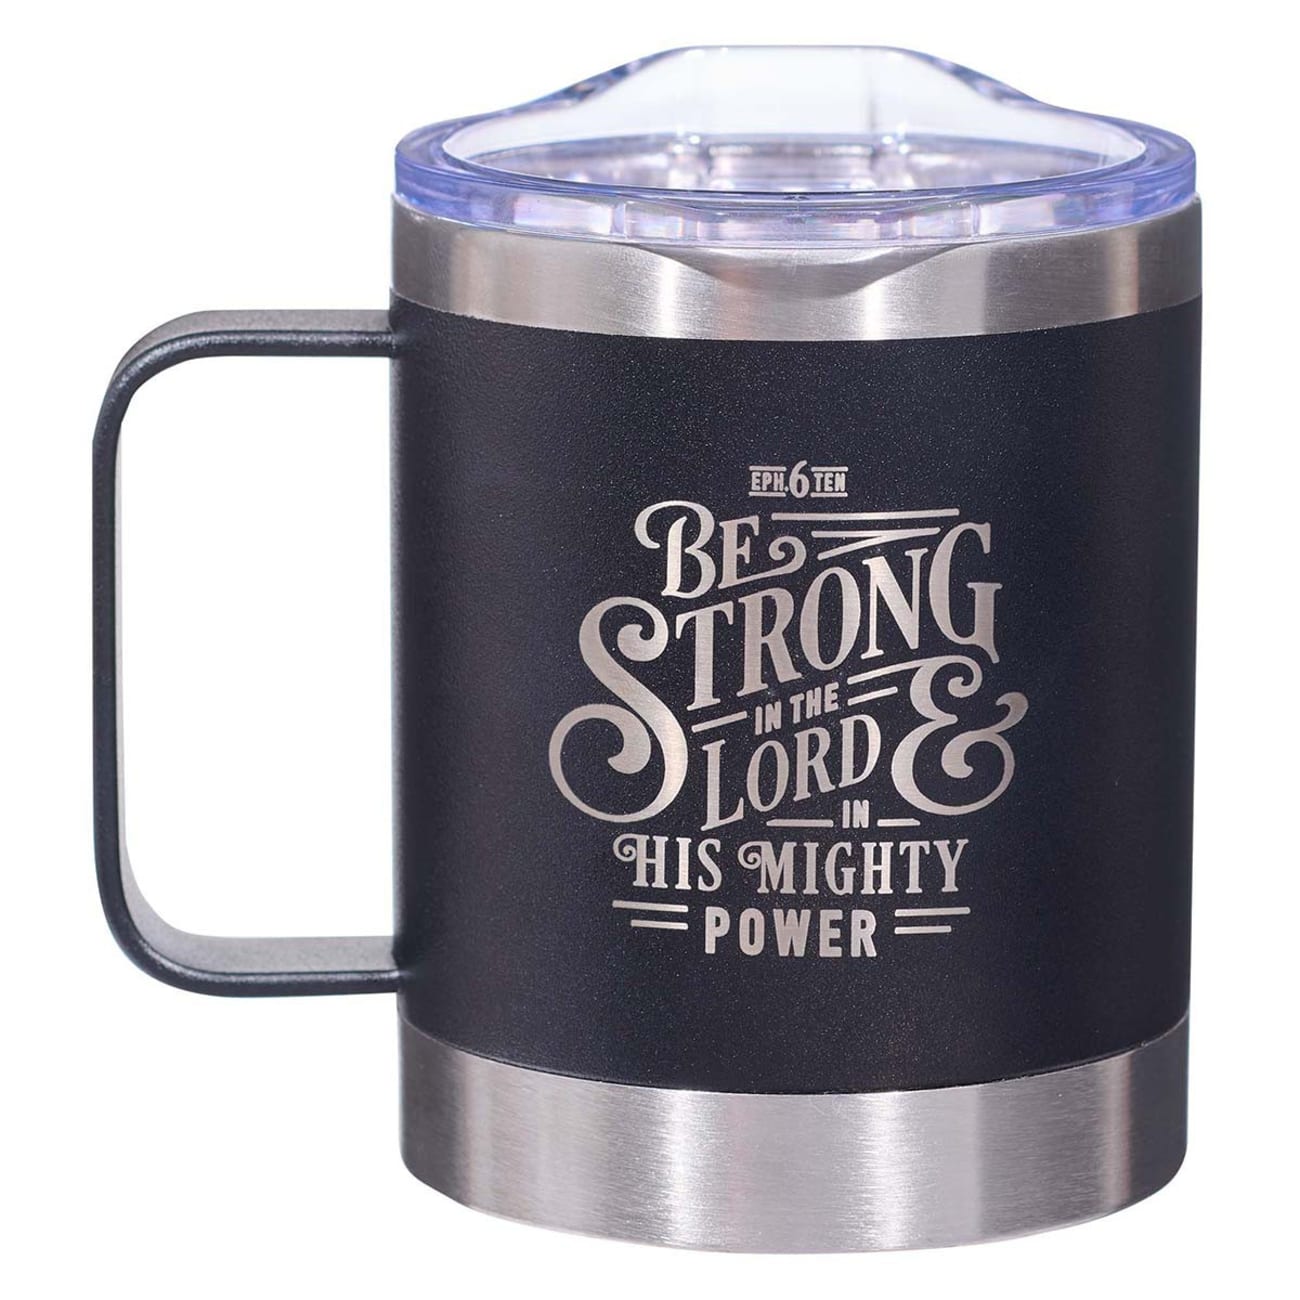 Stainless Steel Travel Mug: Be Strong (Ephesians 6:10) Black (325ml) Homeware